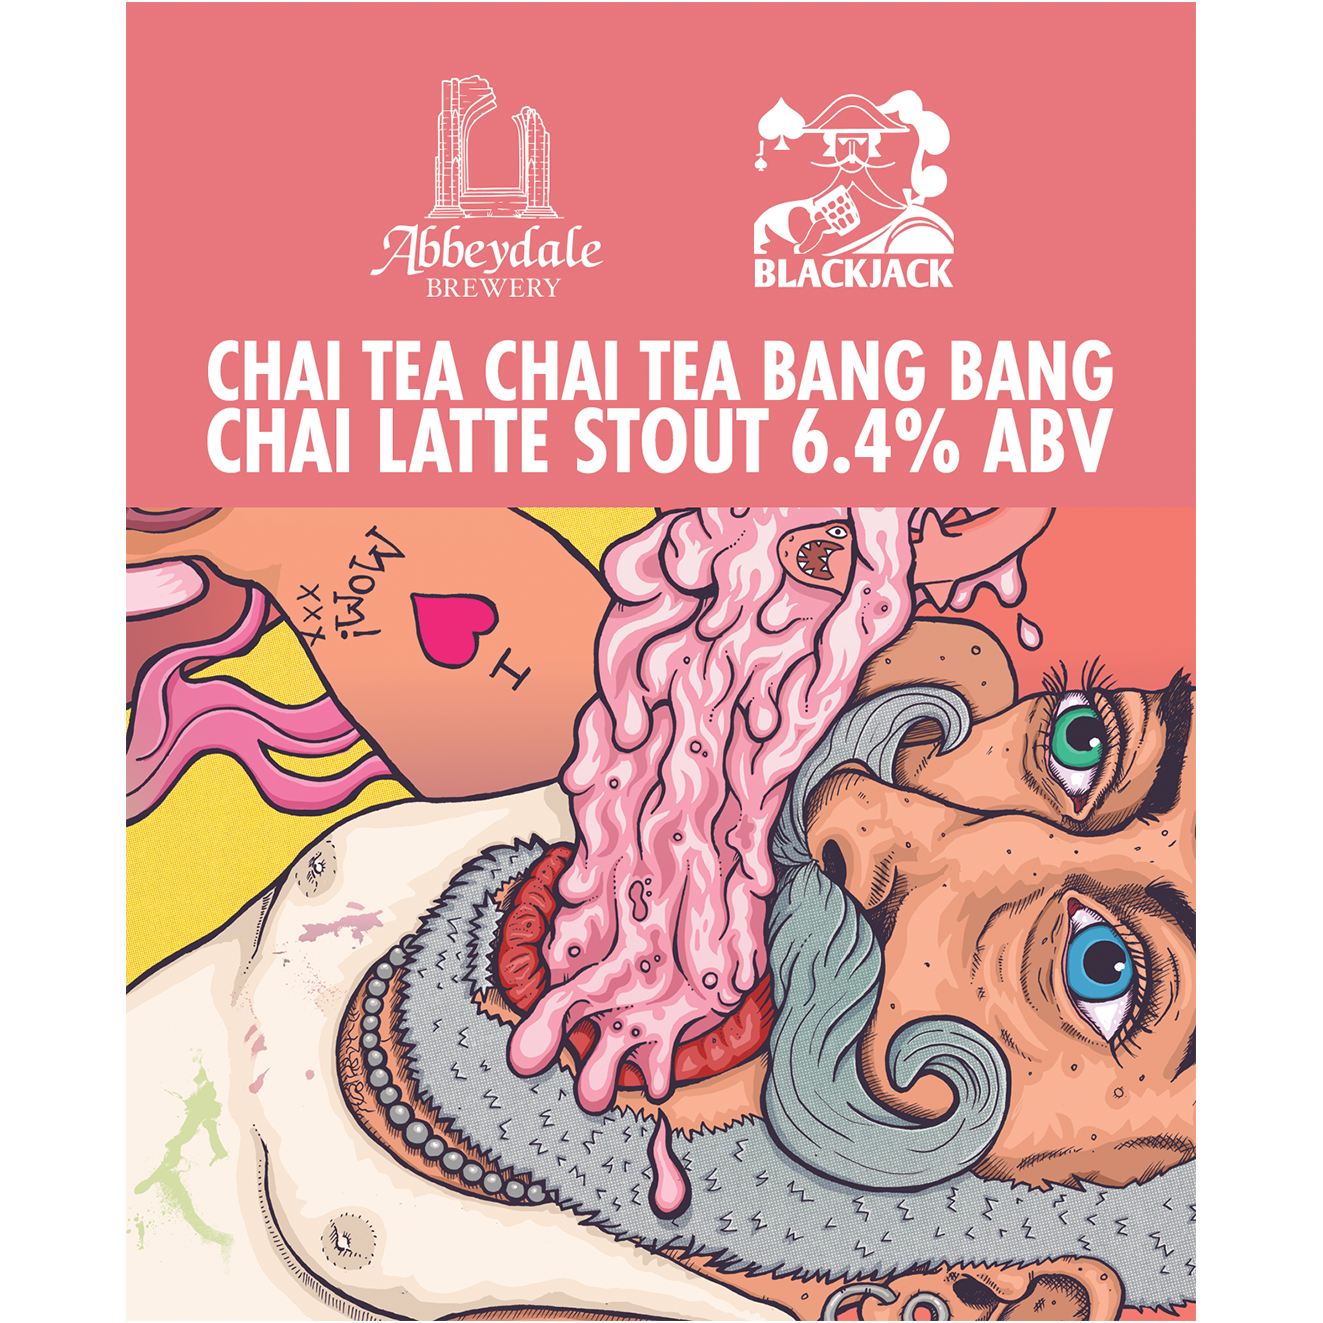 Craft Beer Label Illustration - Abbeydale Brewery - Black Jack Brewery - Chai Tea Chai Tea Bang Bang - Chai Latte Stout Cask Artwork